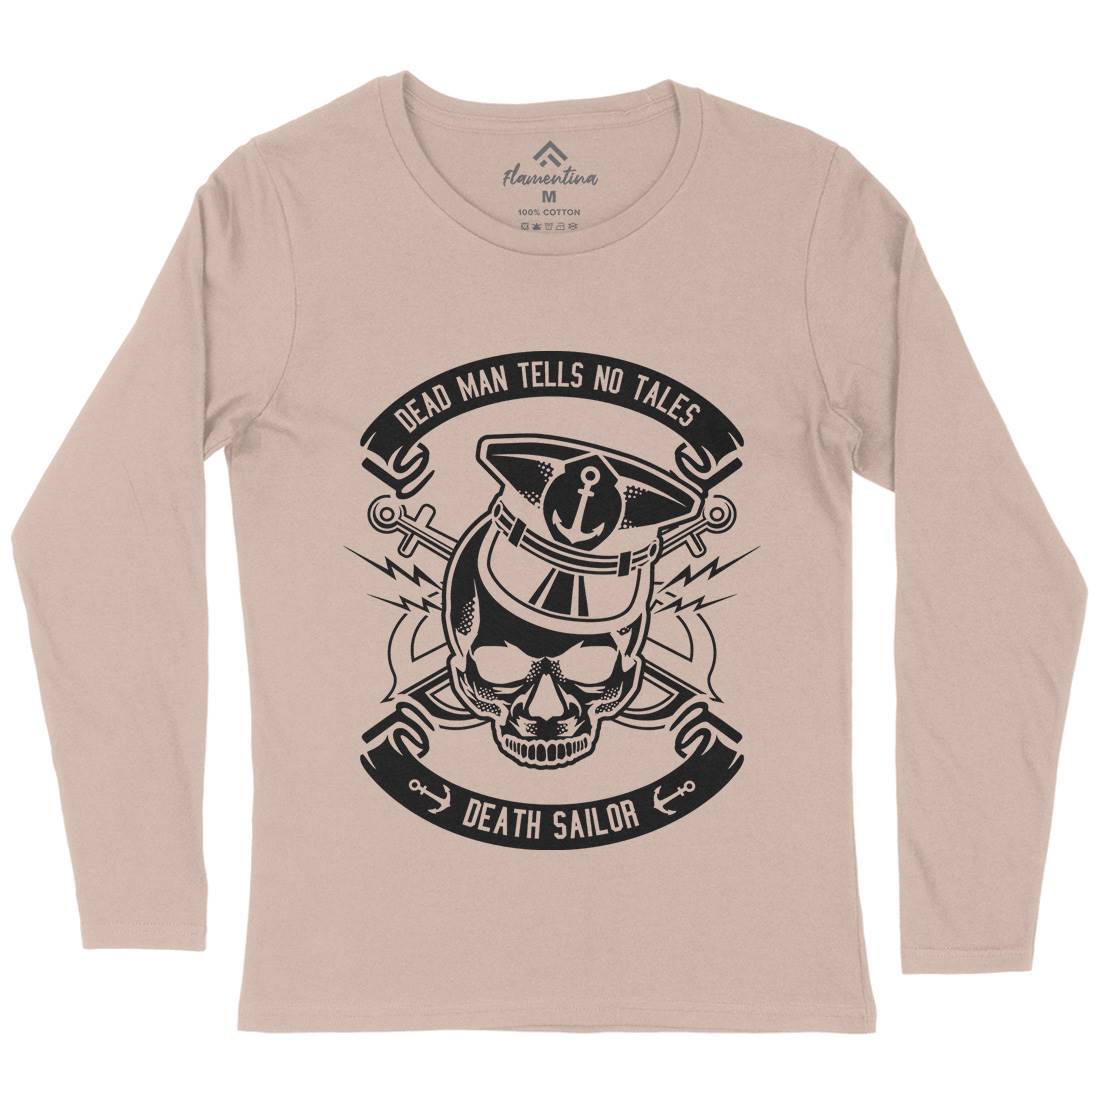 Death Sailor Womens Long Sleeve T-Shirt Navy B529